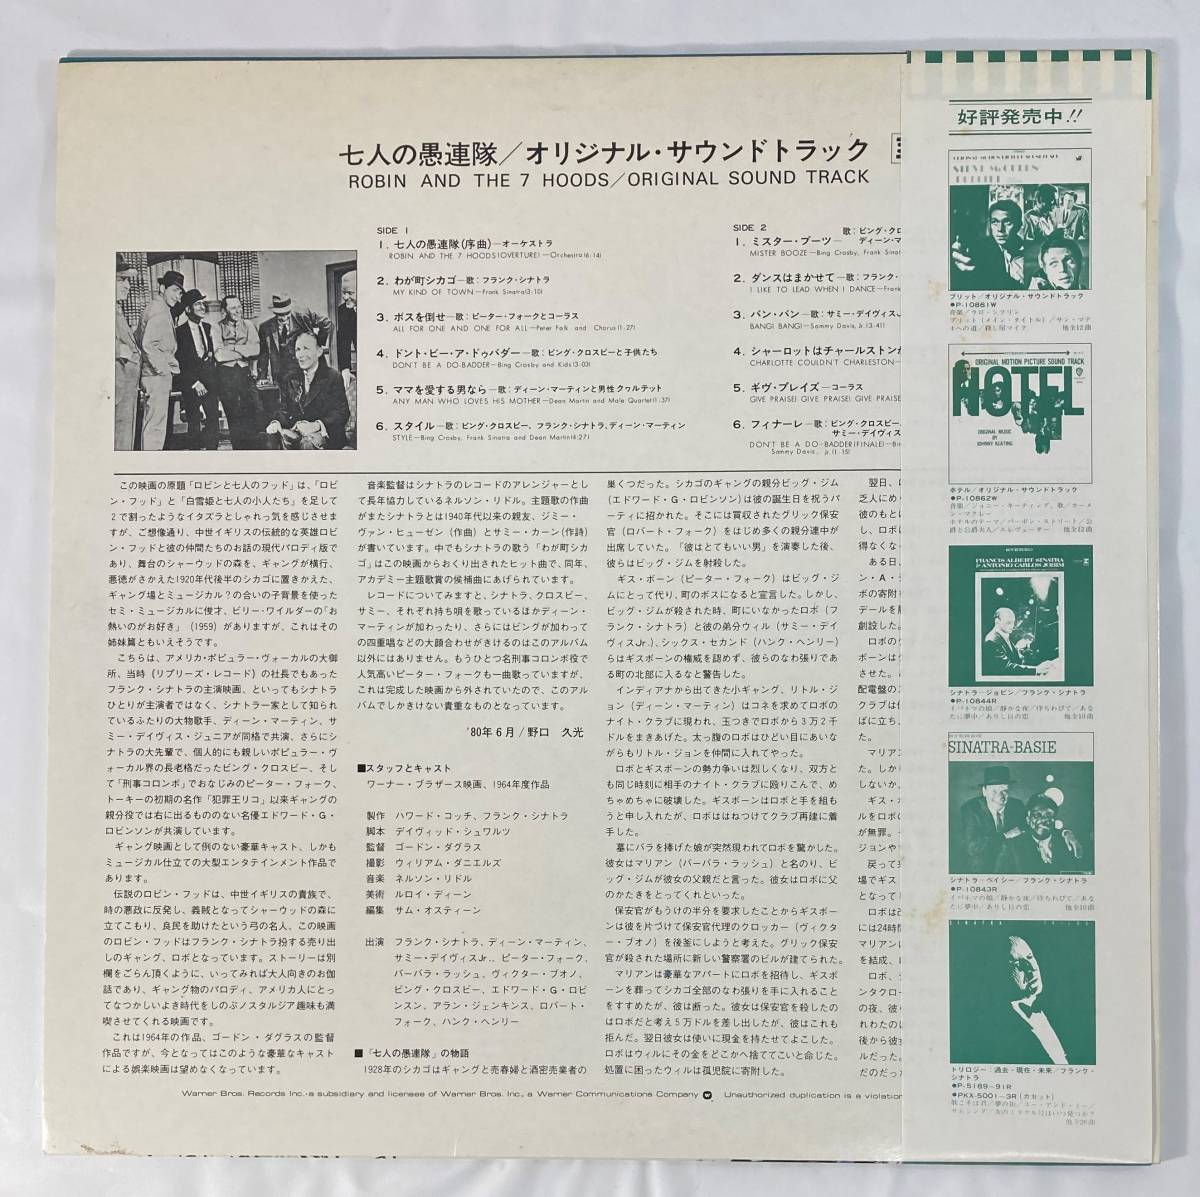  7 person. . ream .(1963)je-mz* Van *hyu-zen arrangement : Nelson *li dollar domestic record LP WP P-10860W STEREO unused obi attaching 